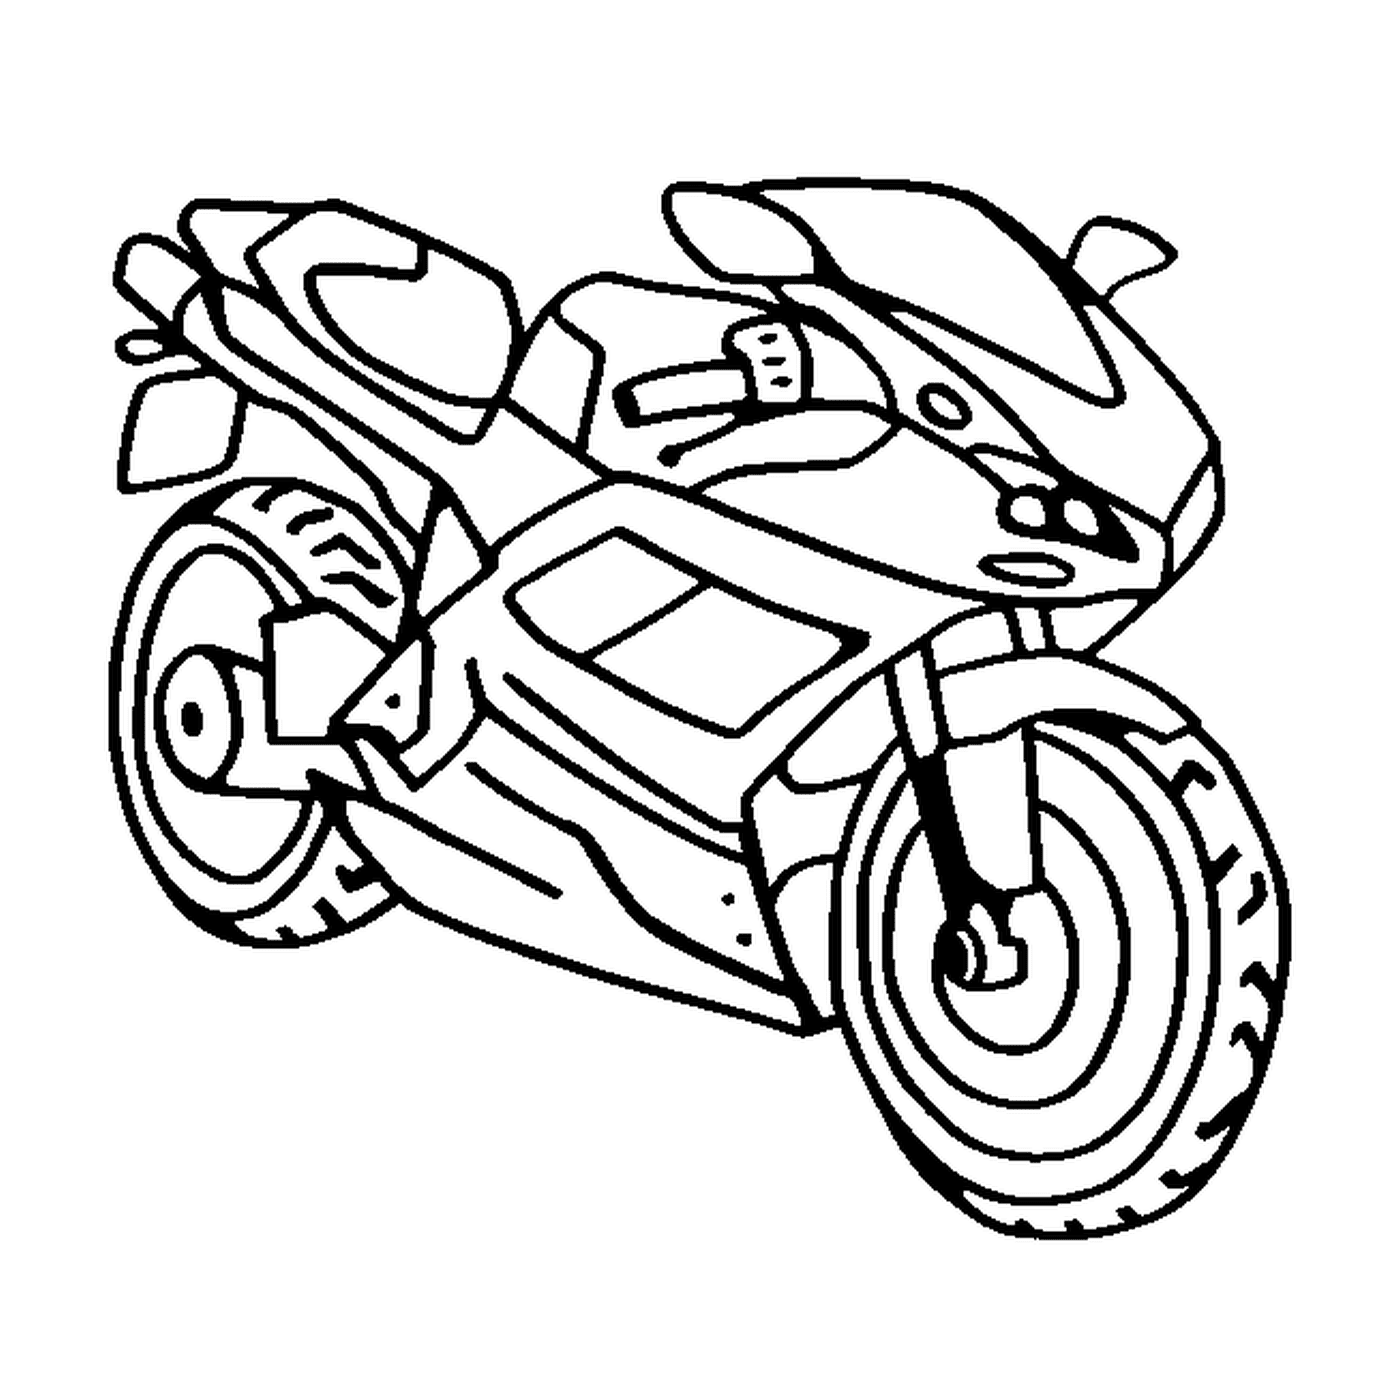  Motorcycle number 44 